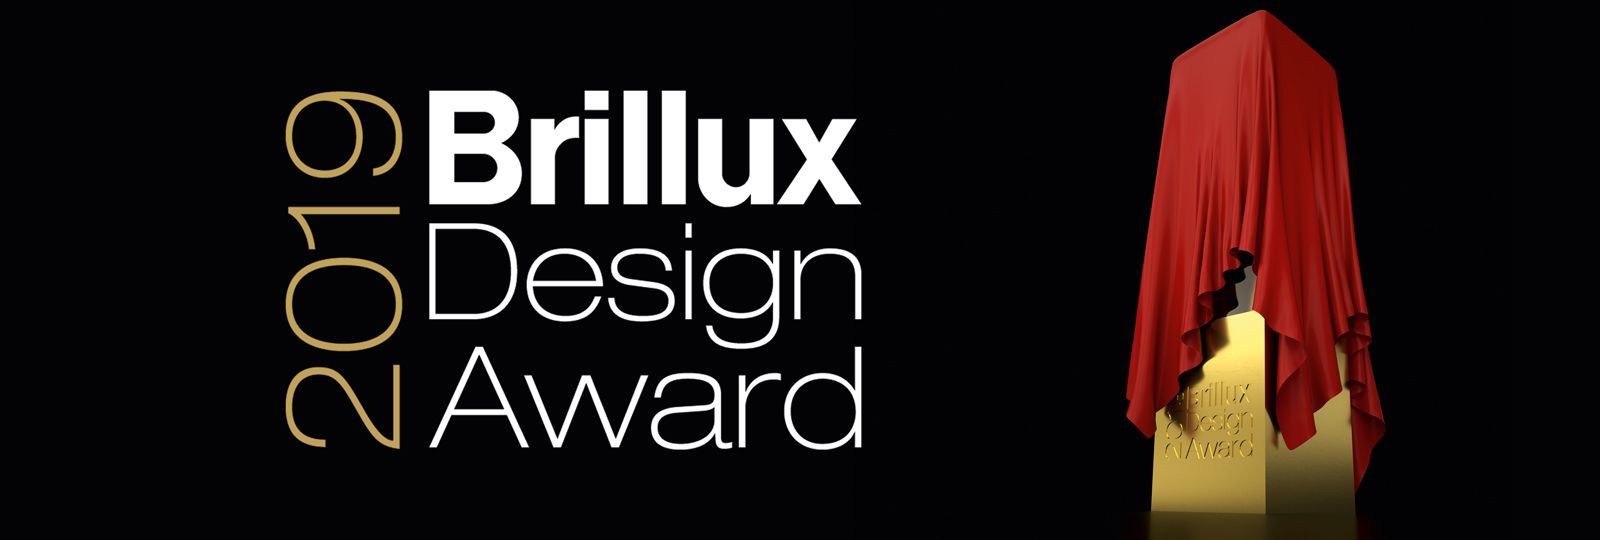 Design Award Preisverleihung 2019